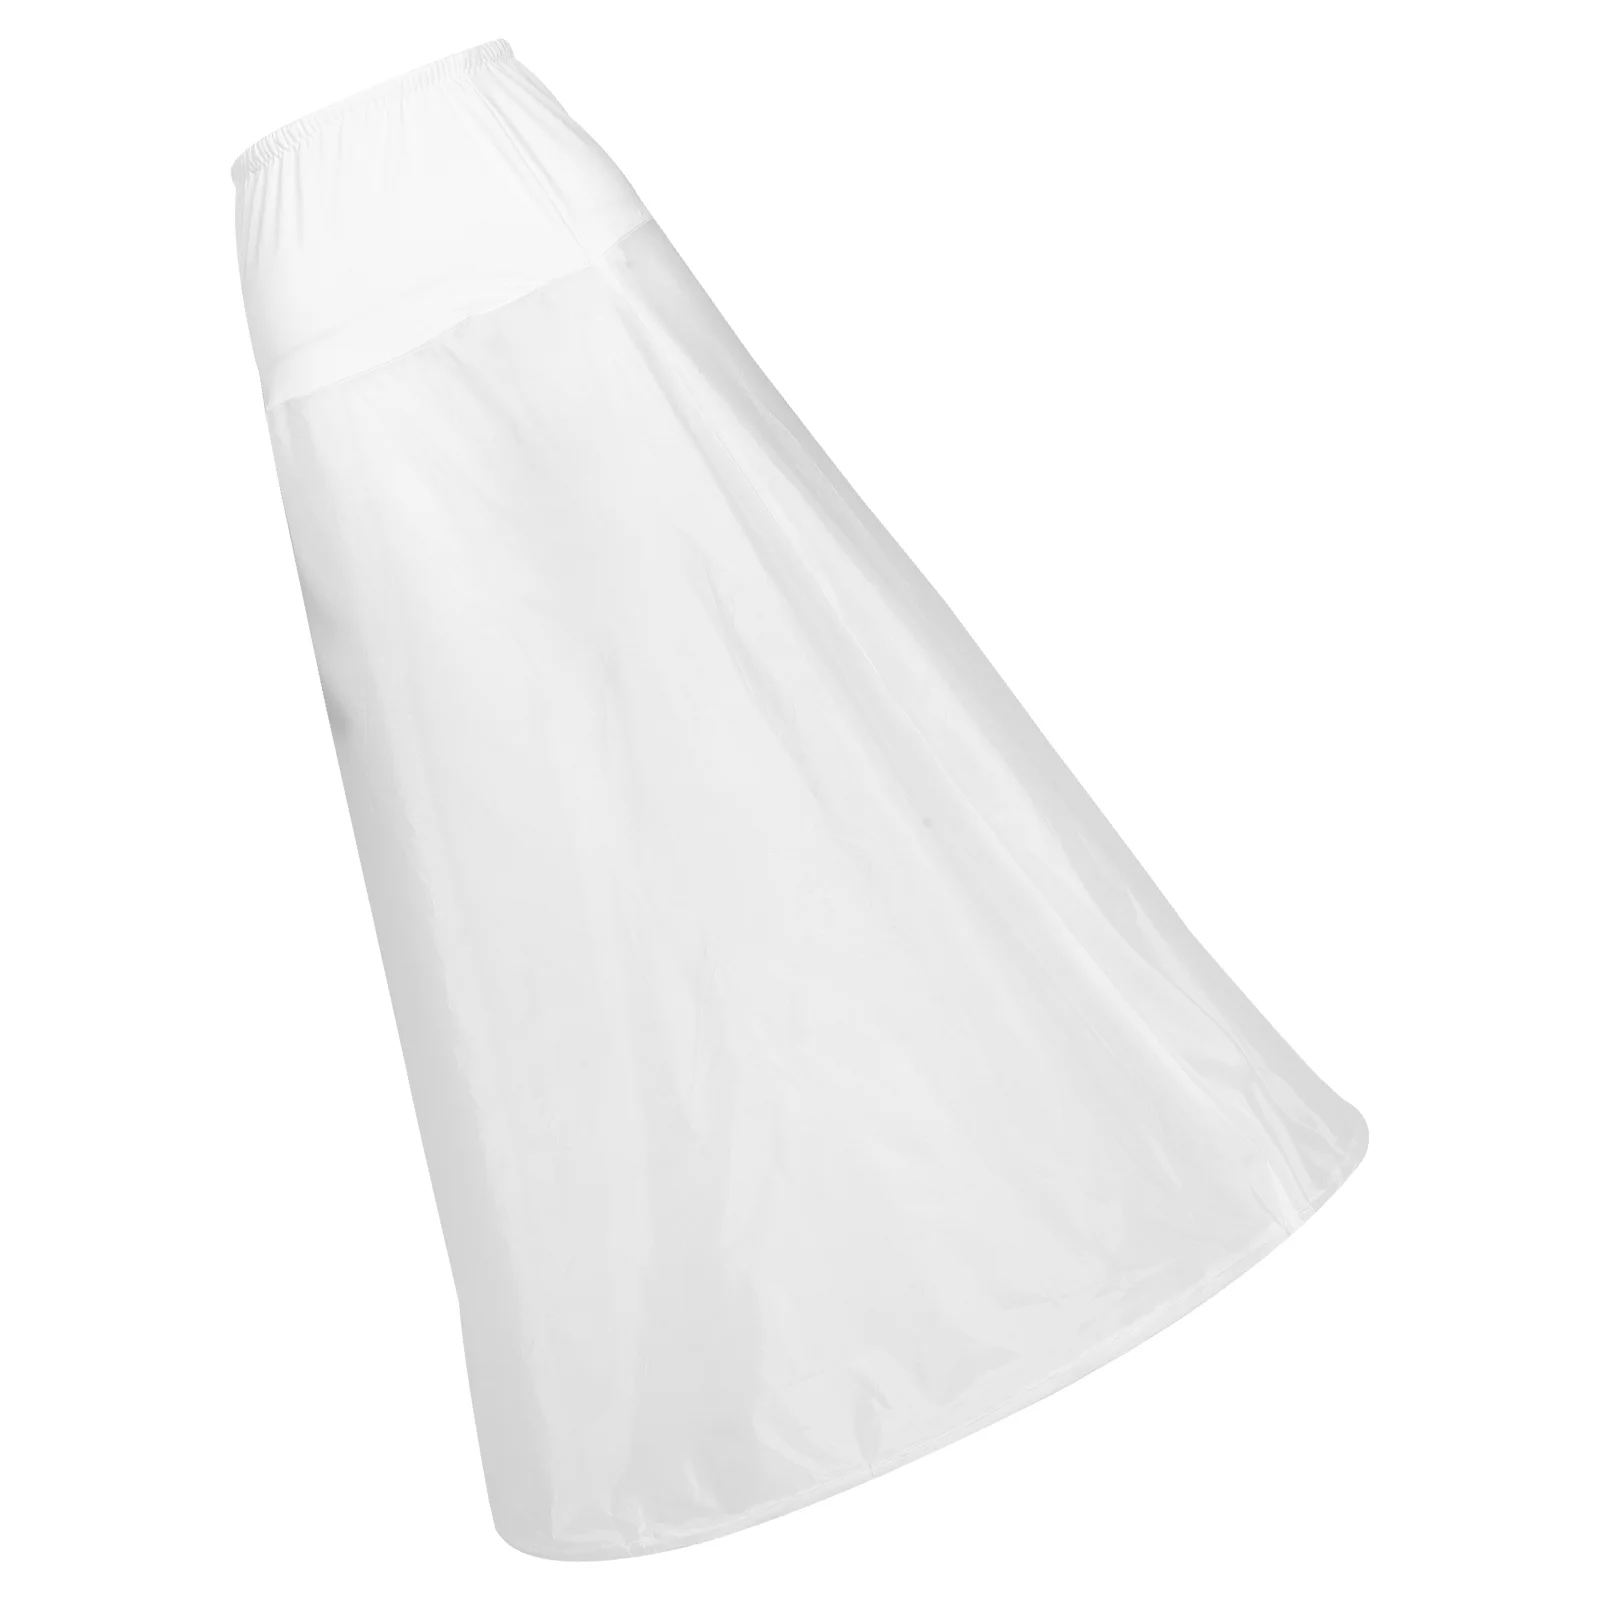 Bottom Skirt Wedding Underskirt Dress Long Petticoat Crinoline Women Petticoats